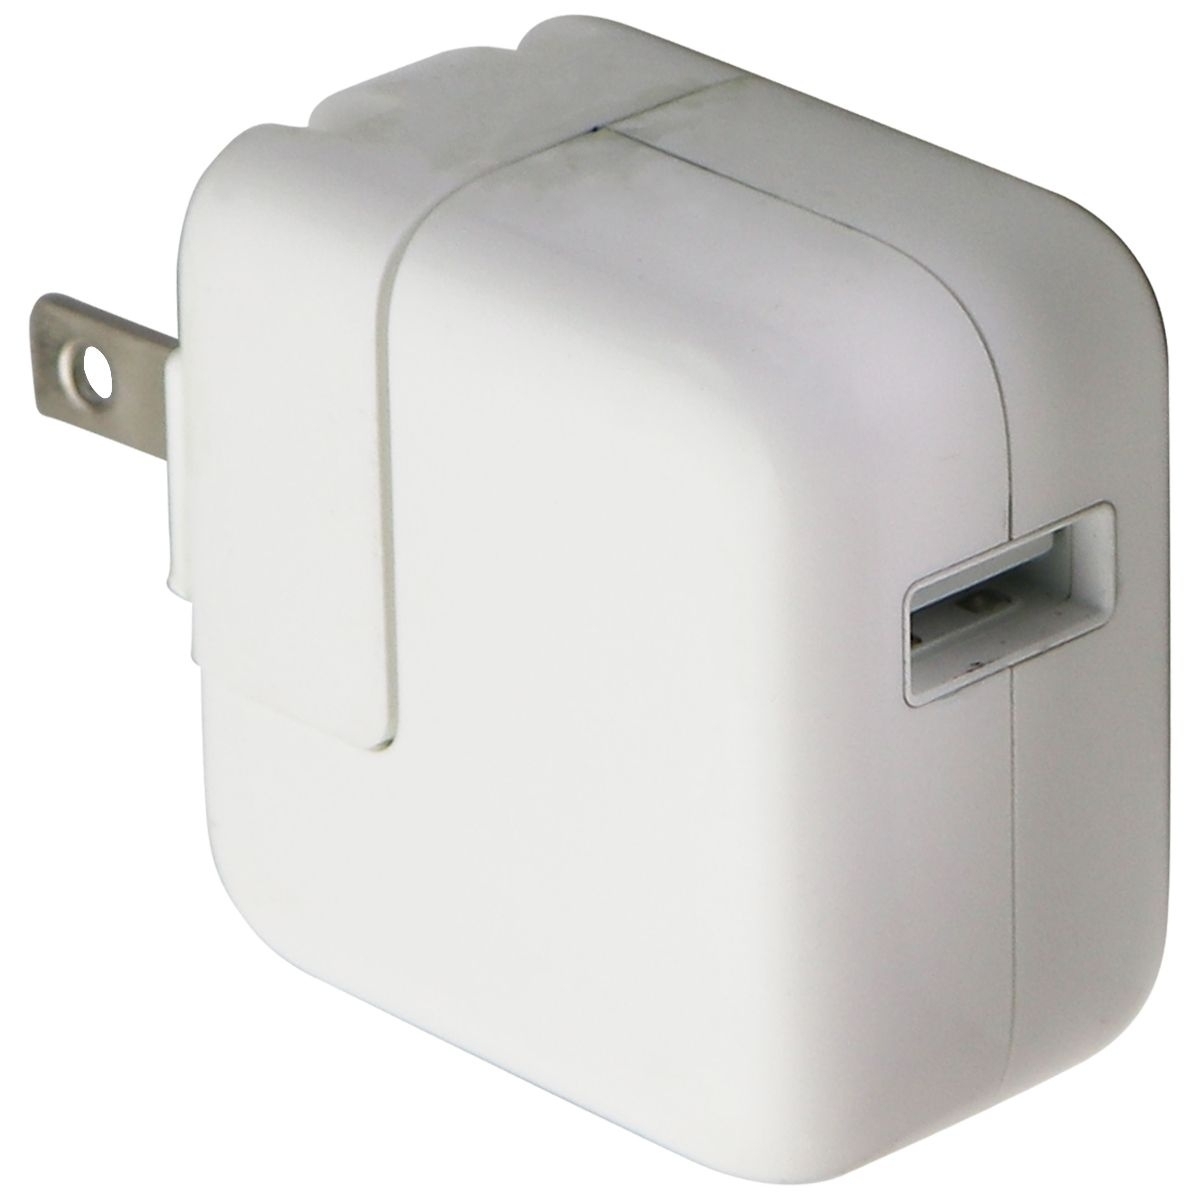 Apple (12-Watt) 5.2V/2.4A Single USB Wall Charger Power Adapter - White (A2167)